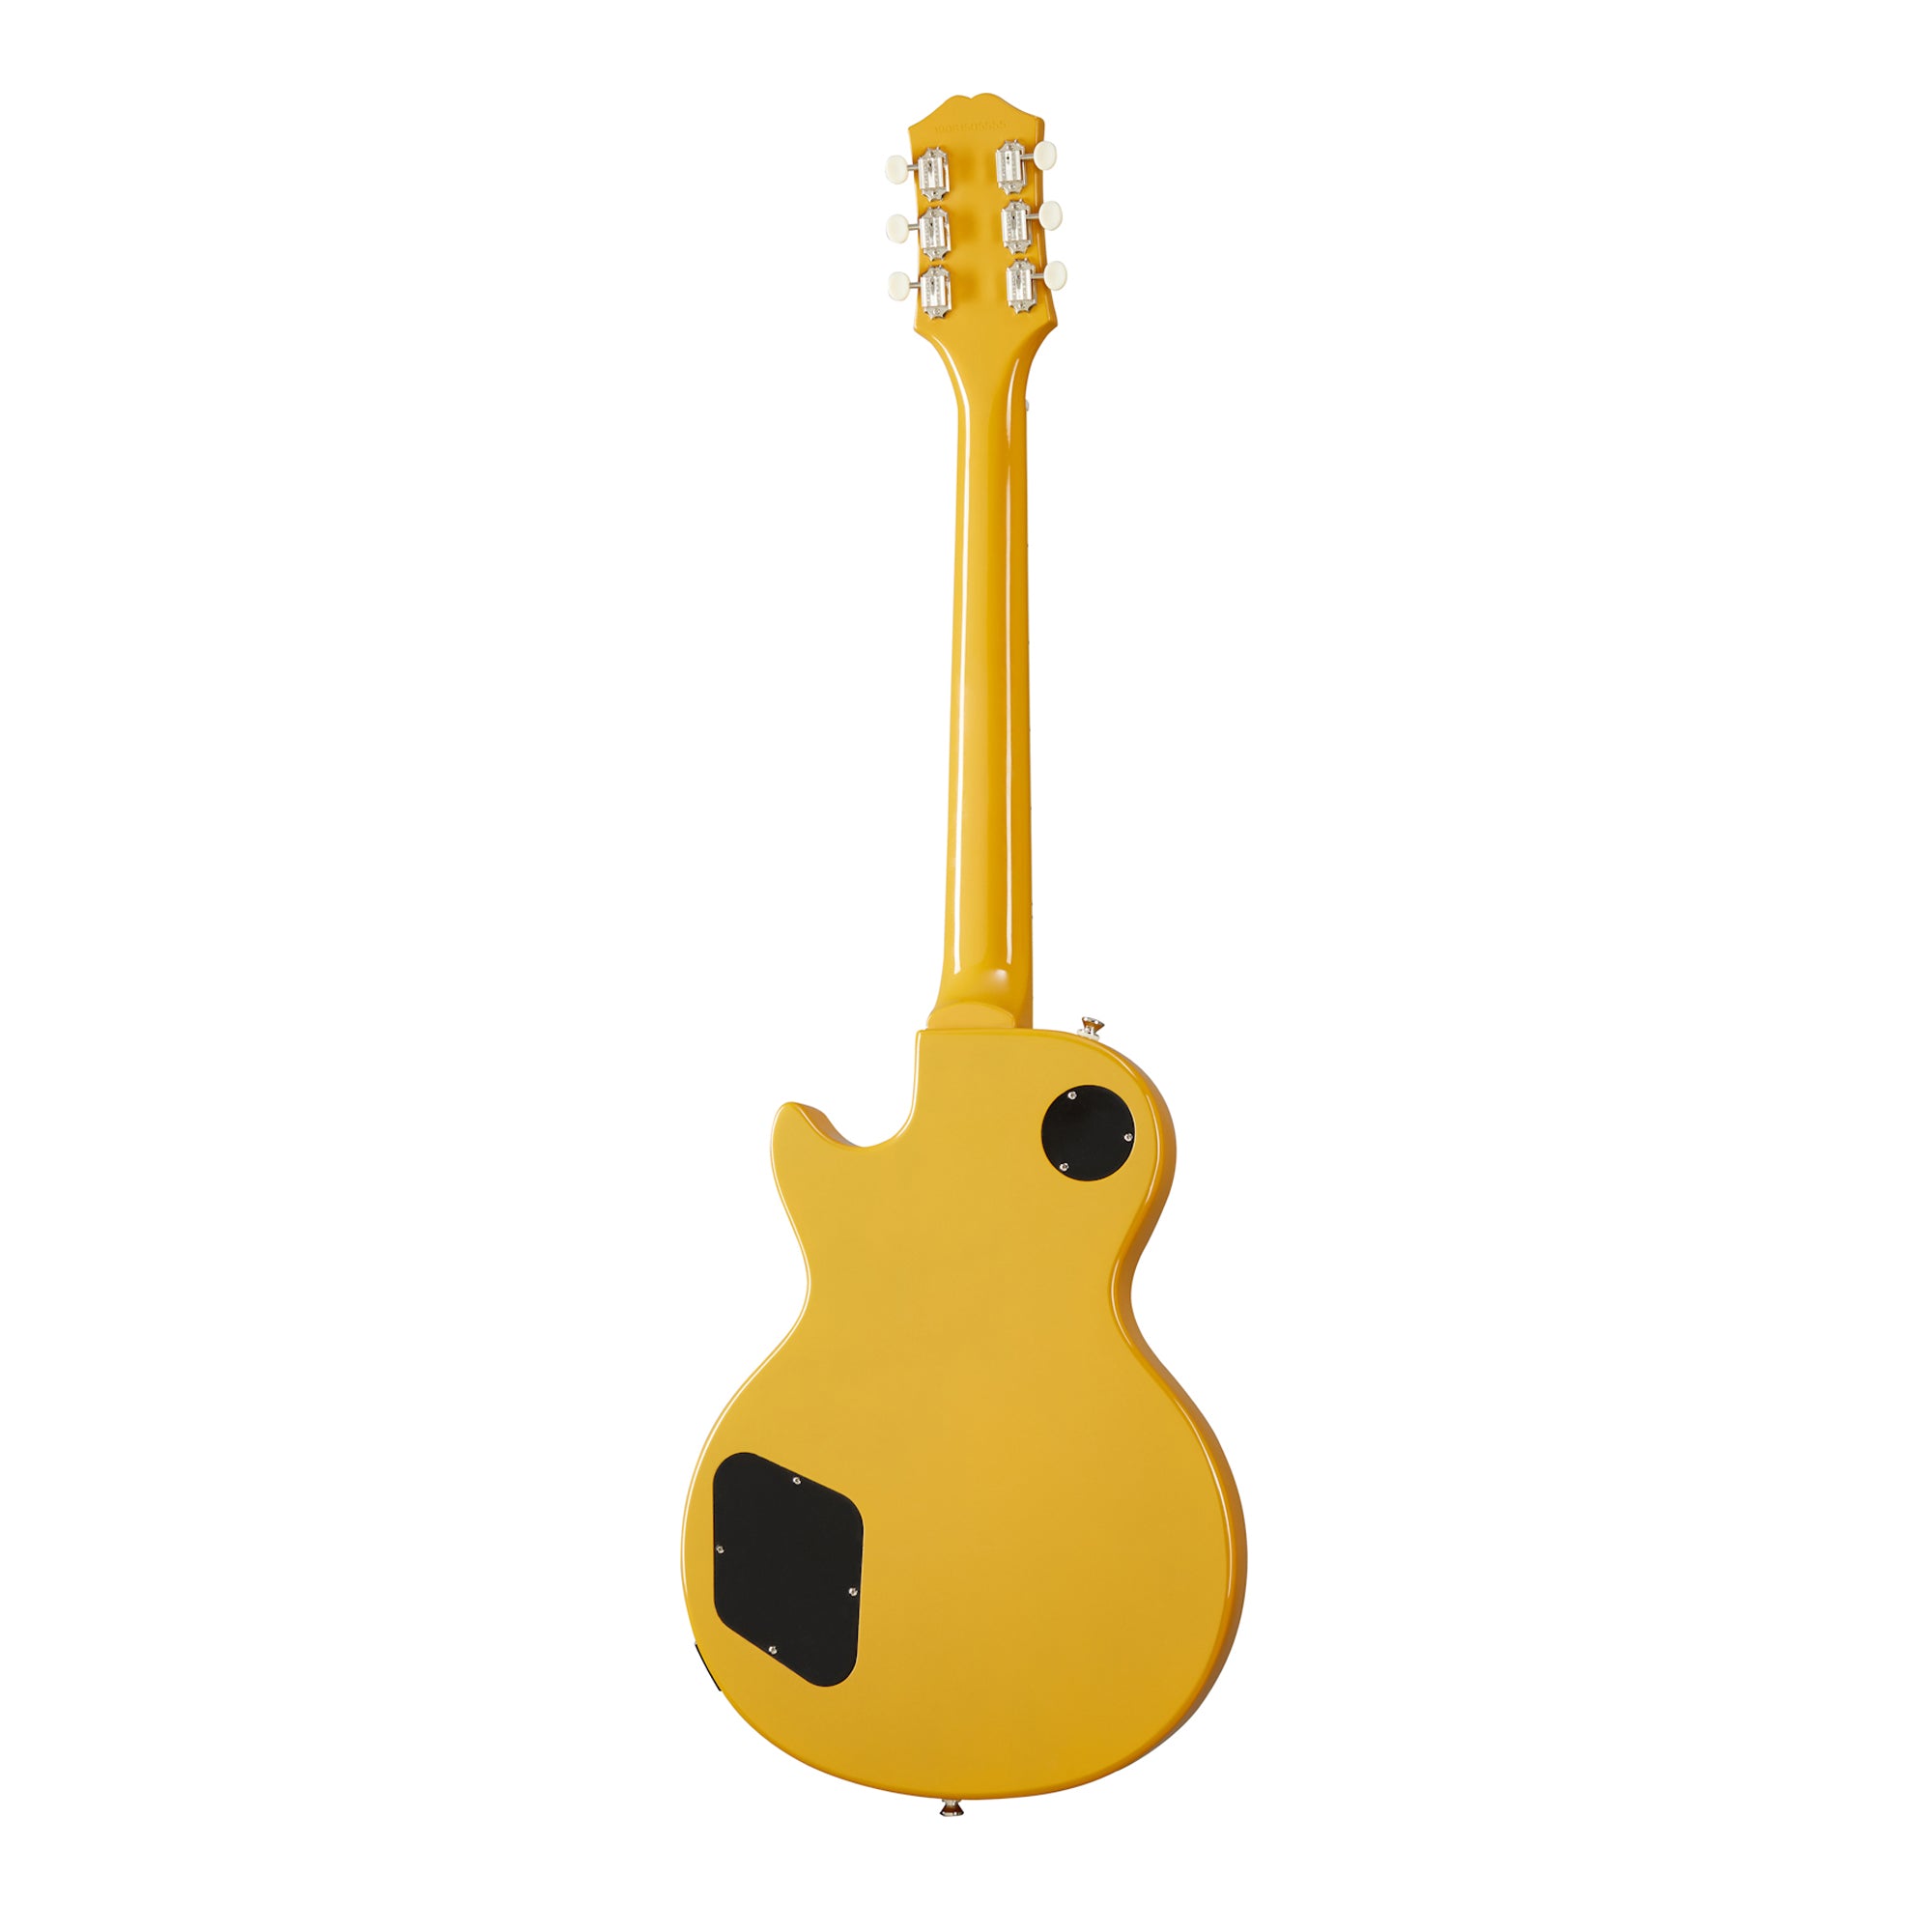 Epiphone EILPTVNH1 Les Paul Special TV Yellow Electric Guitar